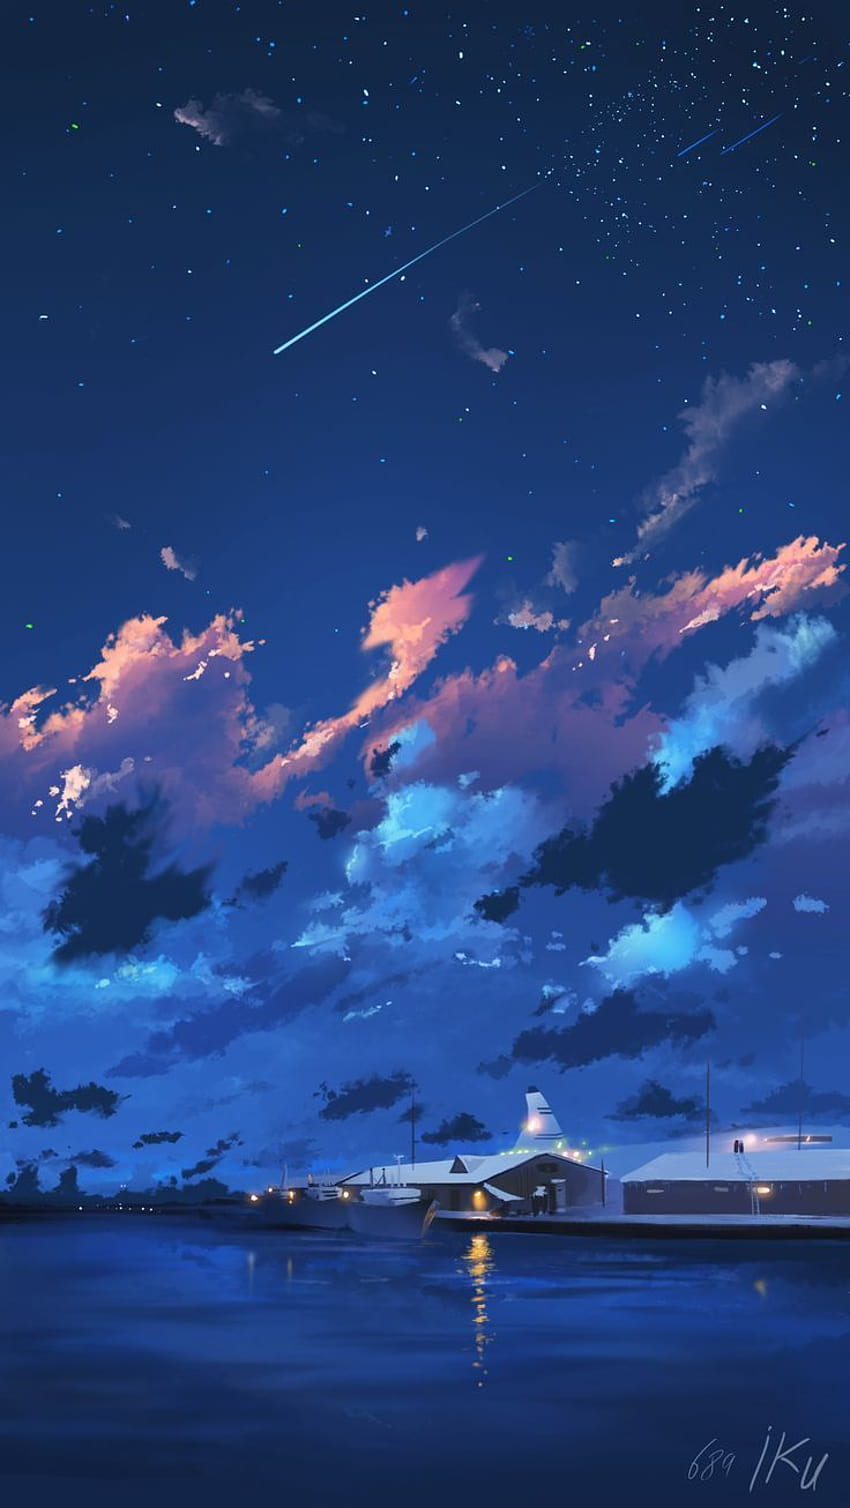 61+] Cool Anime Landscape Wallpapers - WallpaperSafari